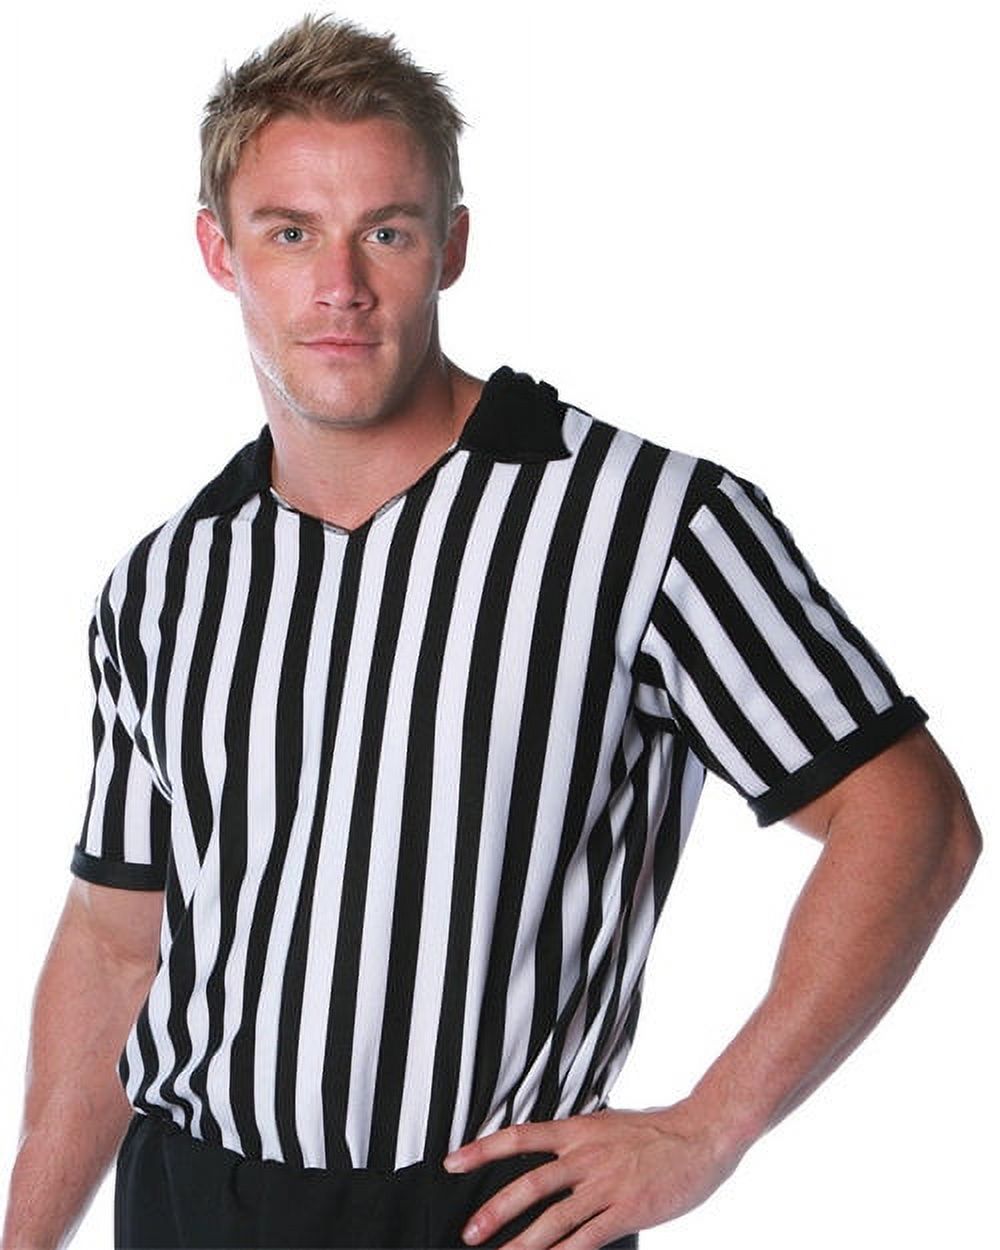 Underwraps UR29013 Men's Referee Shirt Costume - image 1 of 2